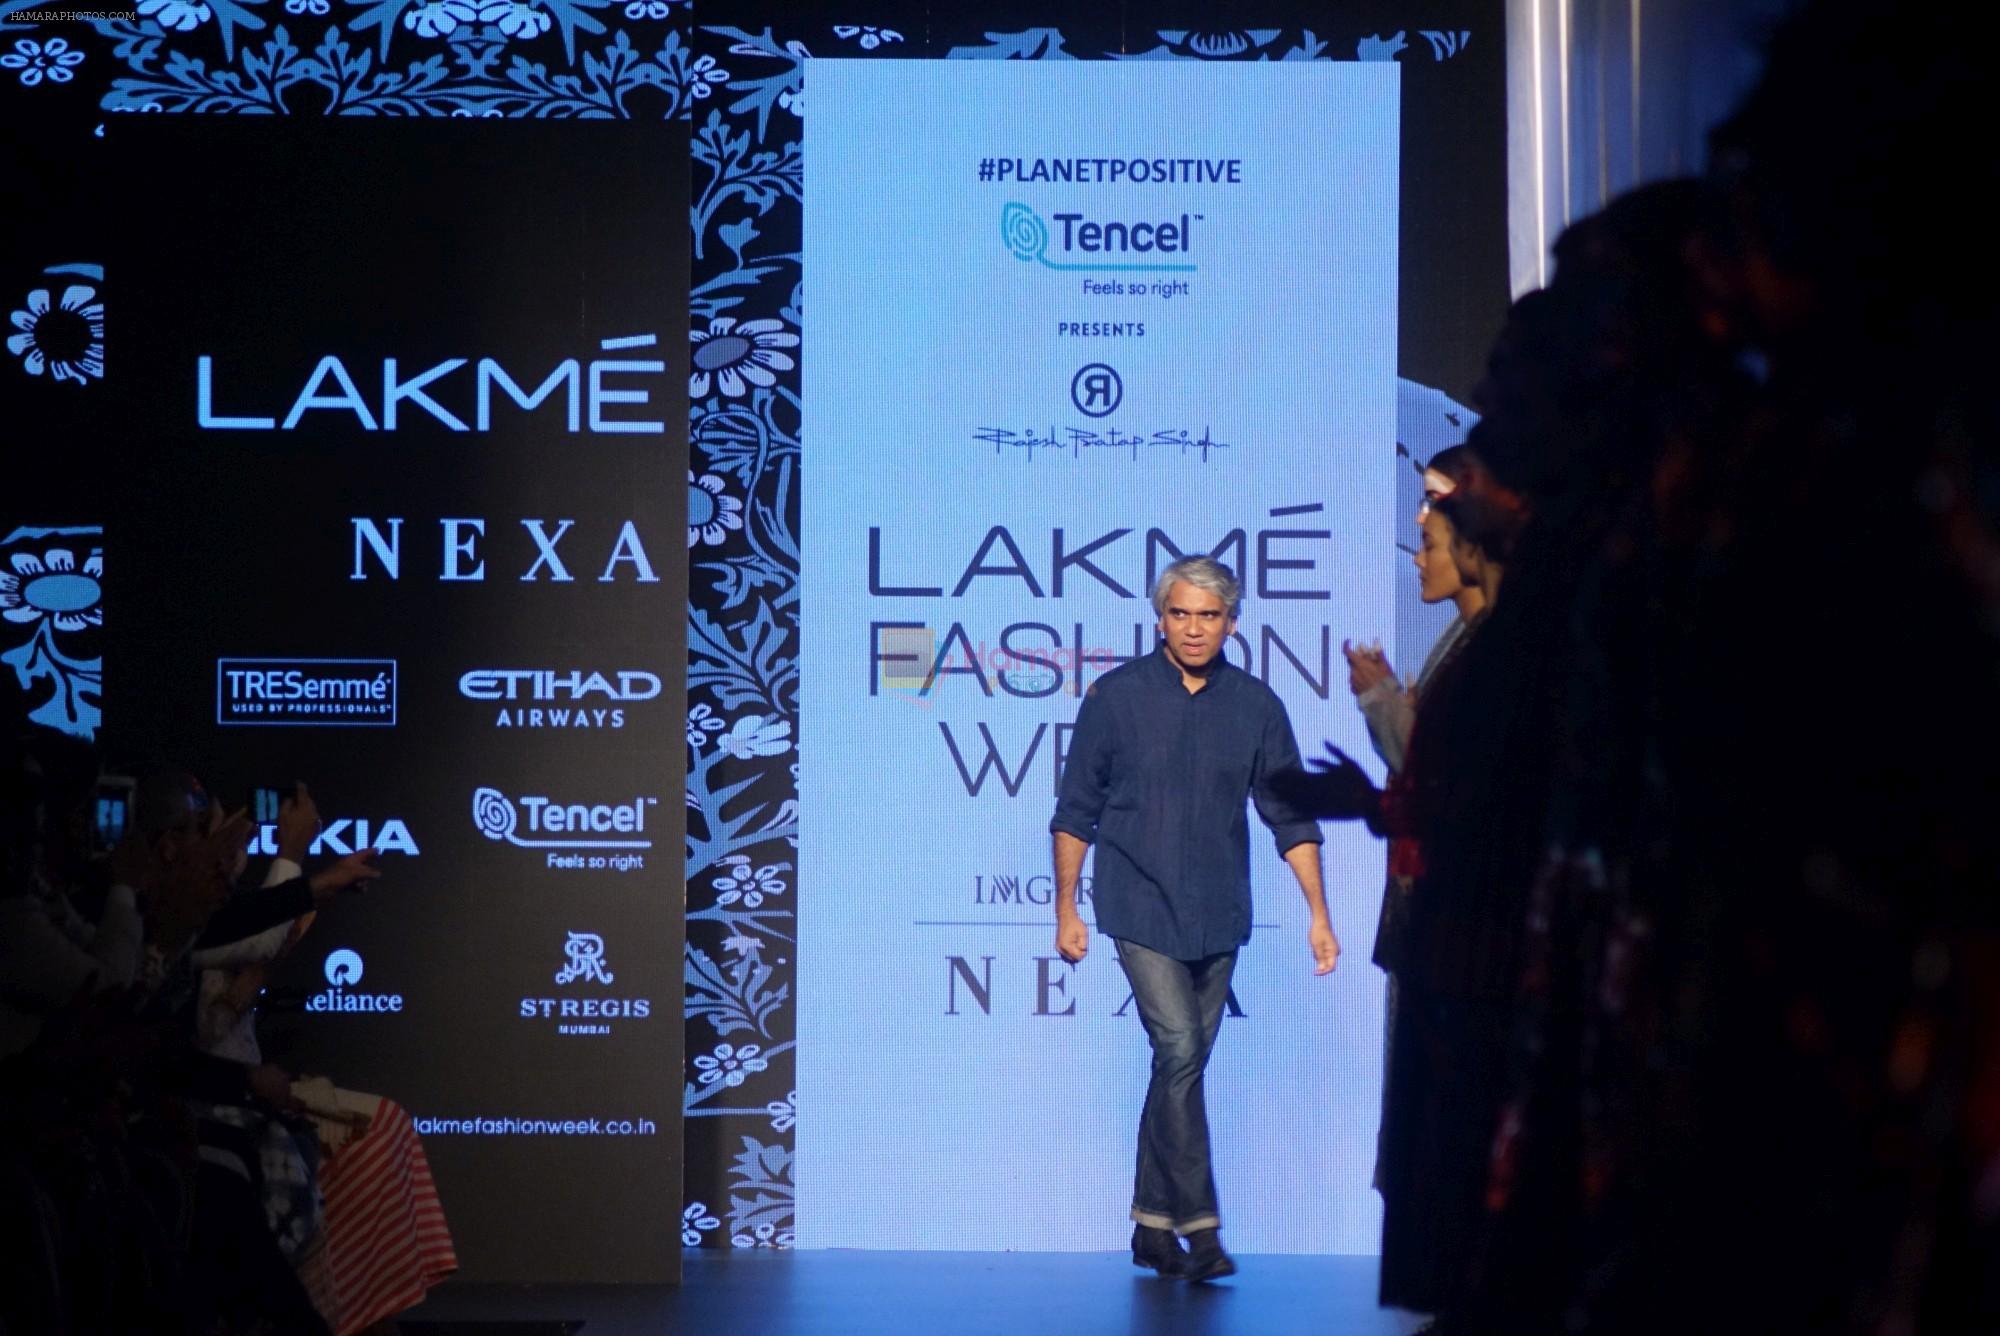 at PLANETPOSITIVE TENCEL by RAJESH PRATAP SINGH at Lakme Fashion Week on 23rd Aug 2018